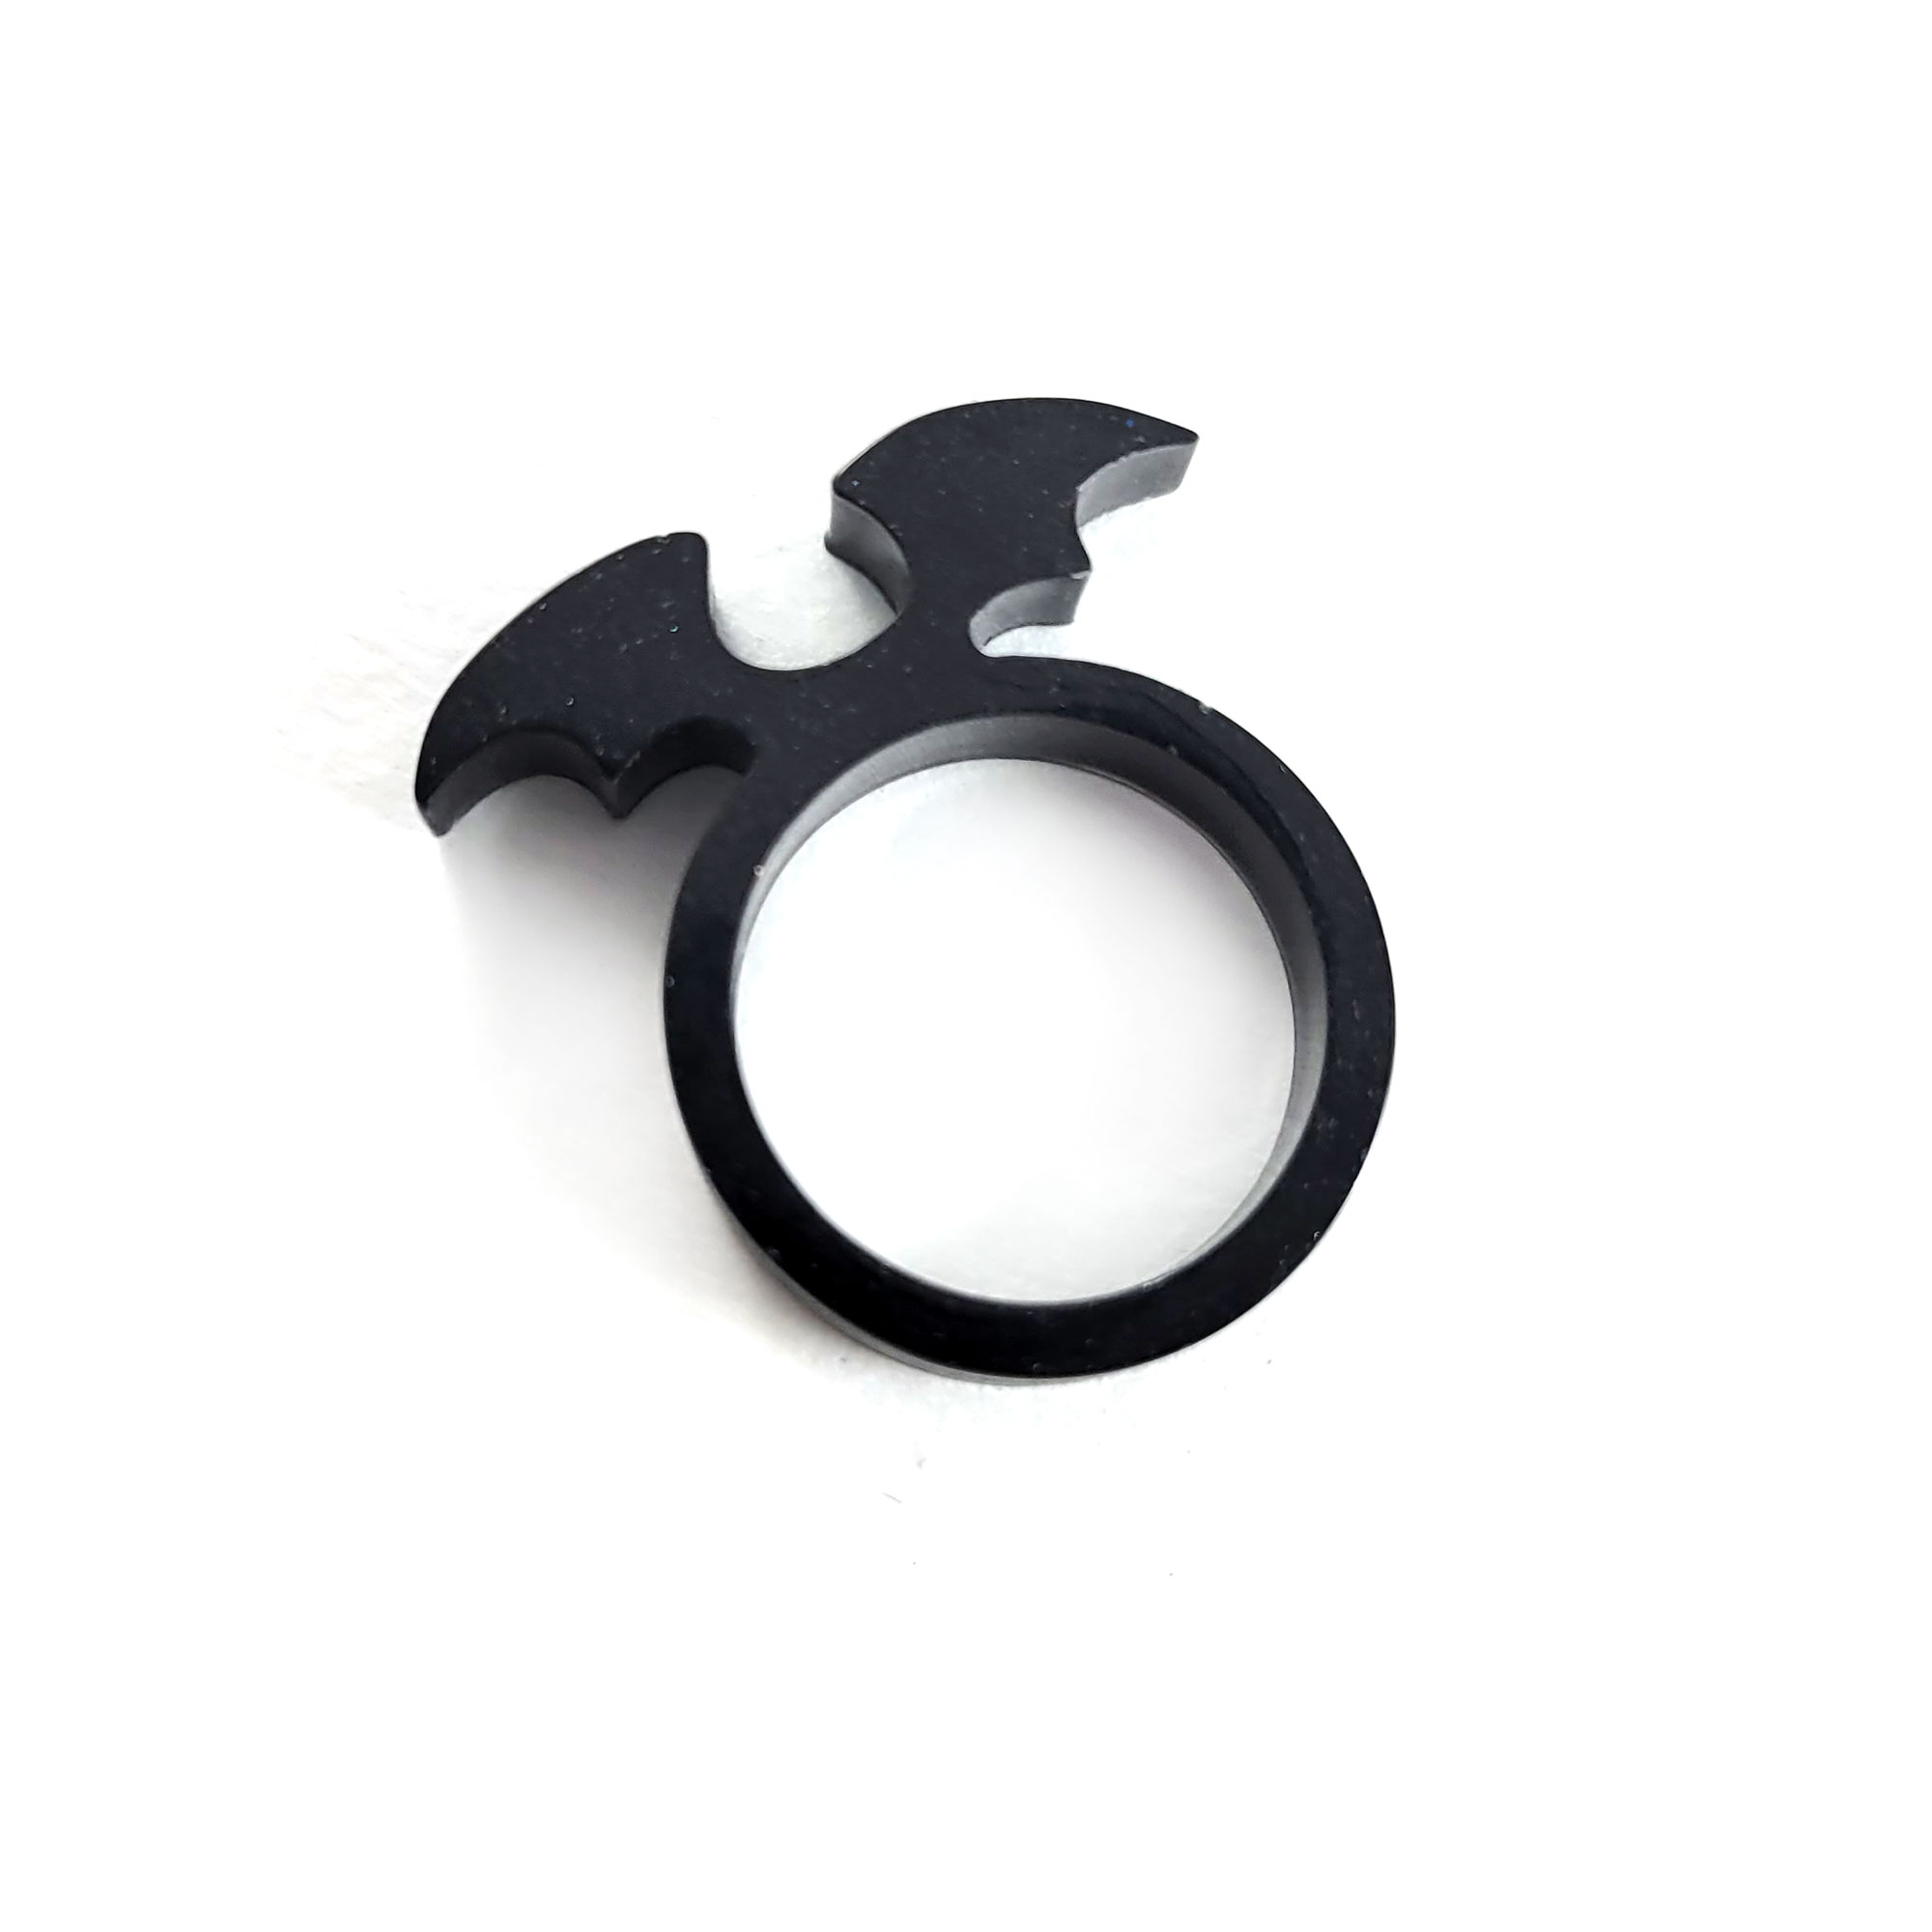 Black Bat Wing Ring by Wilde Designs